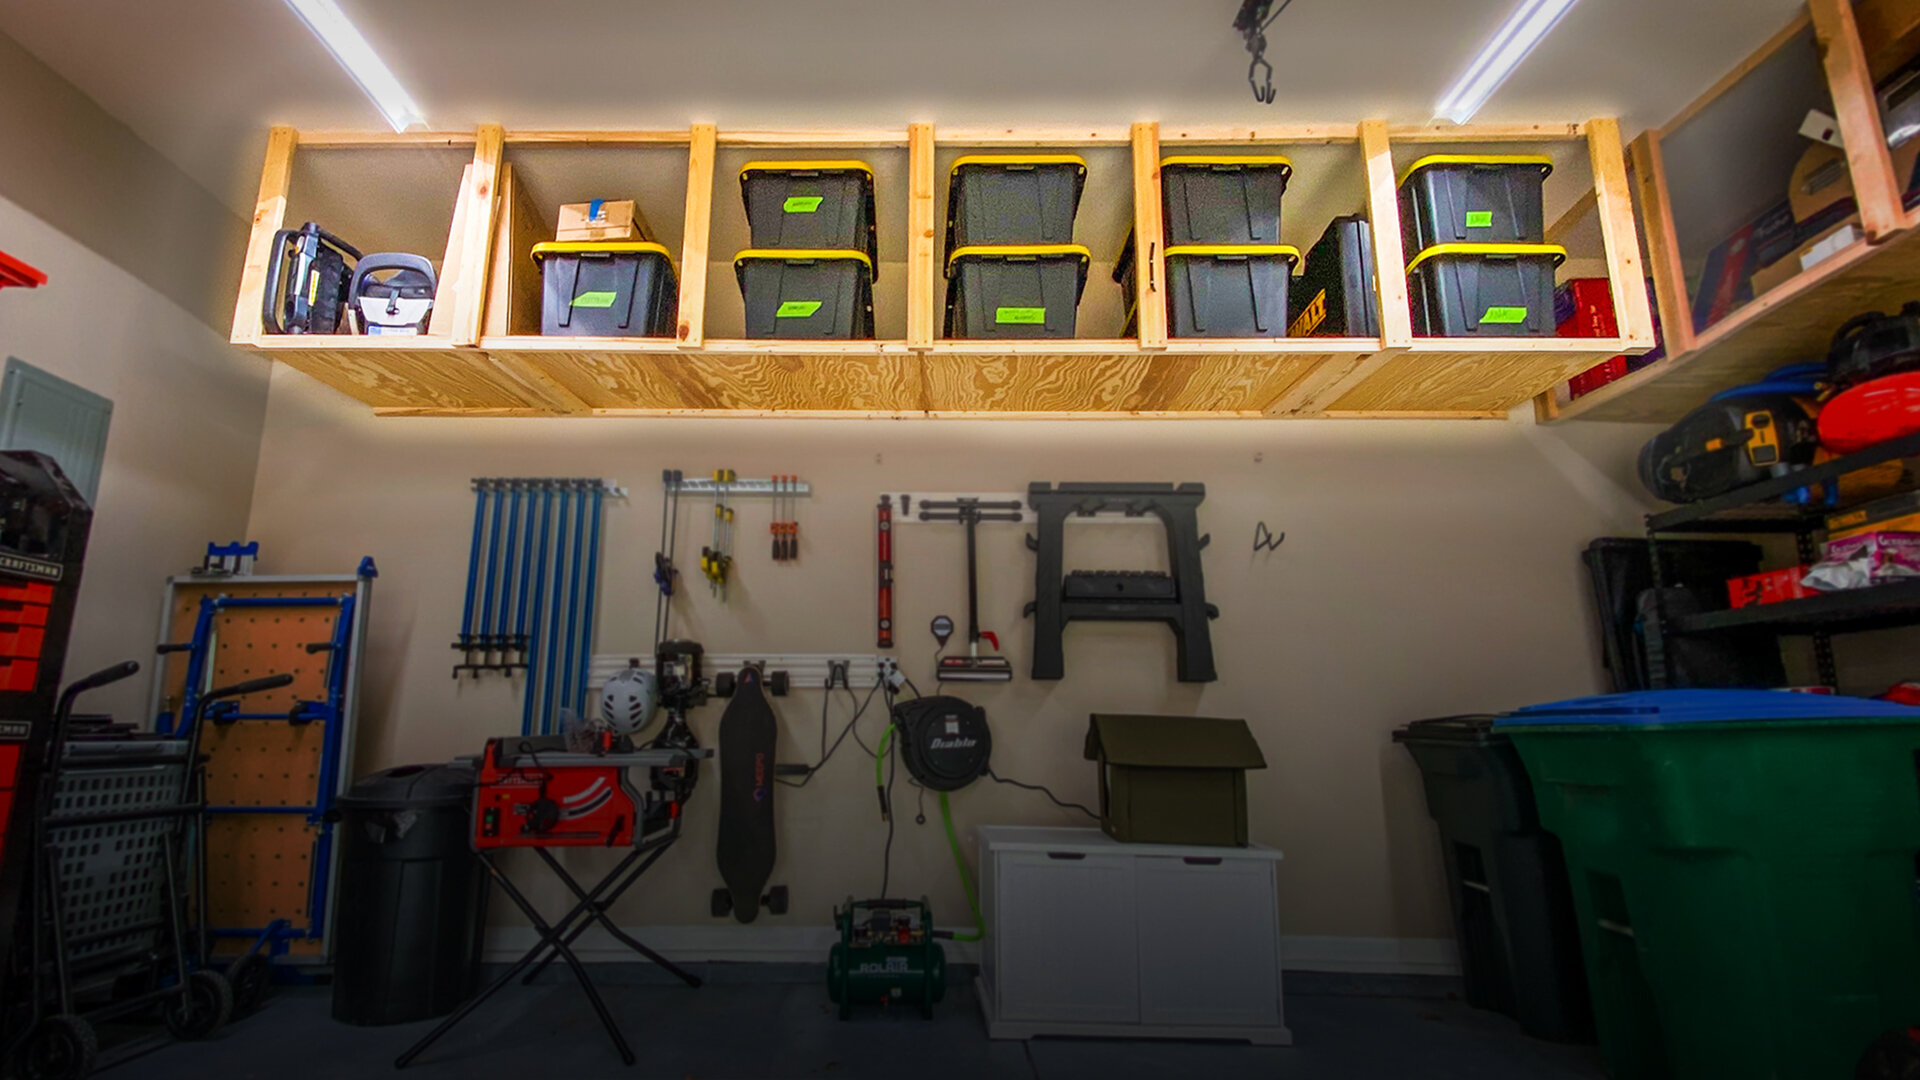 How To Build Diy Garage Storage Shelves, How To Build Garage Ceiling Shelves